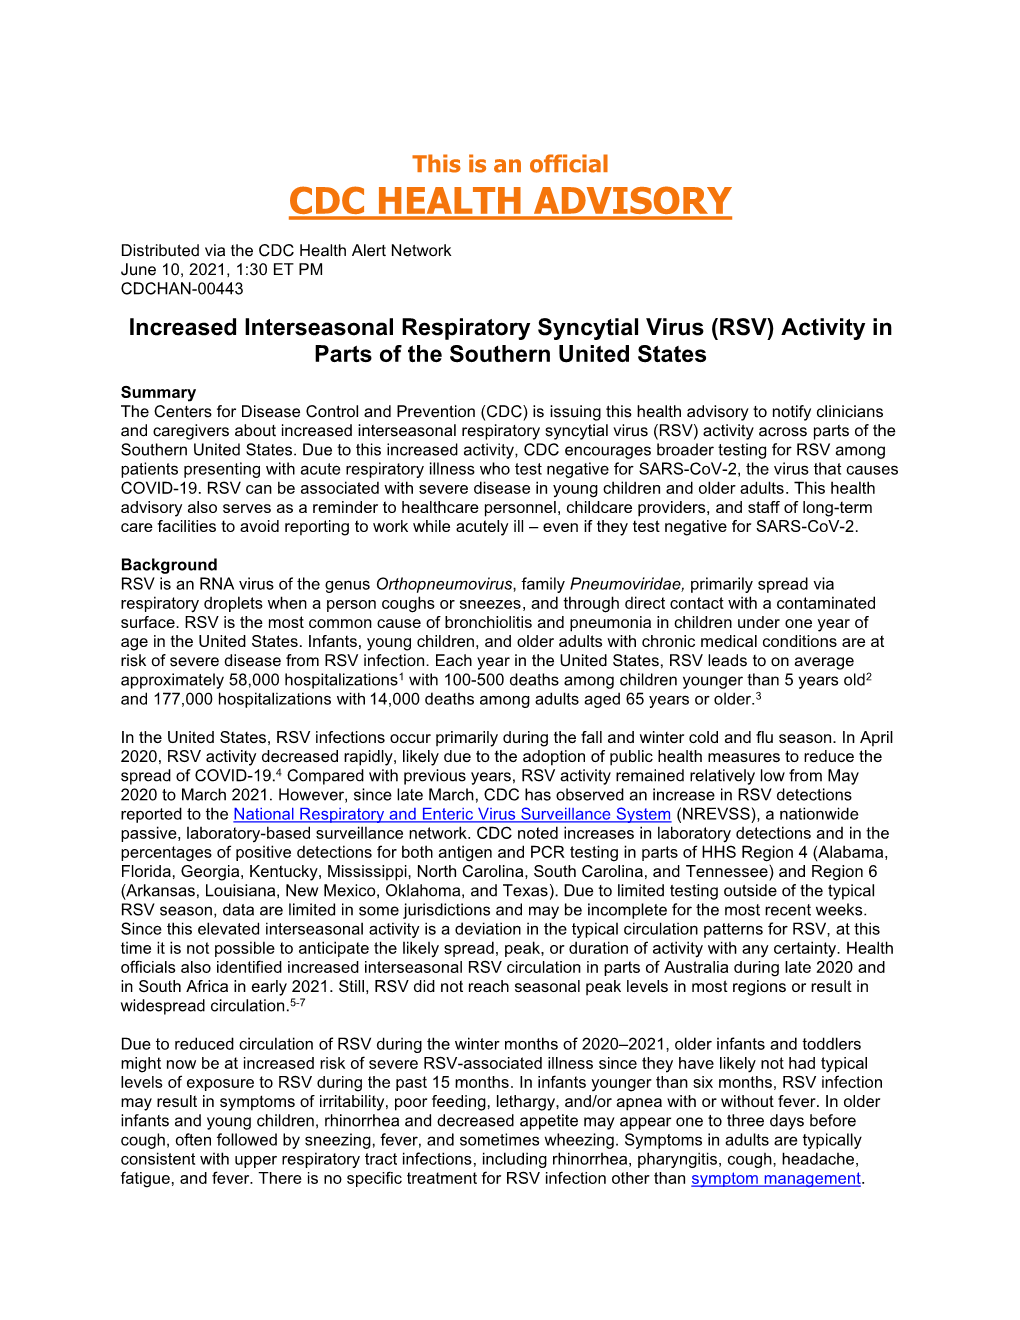 CDC Health Advisory: Increased Interseasonal Respiratory Syncytial